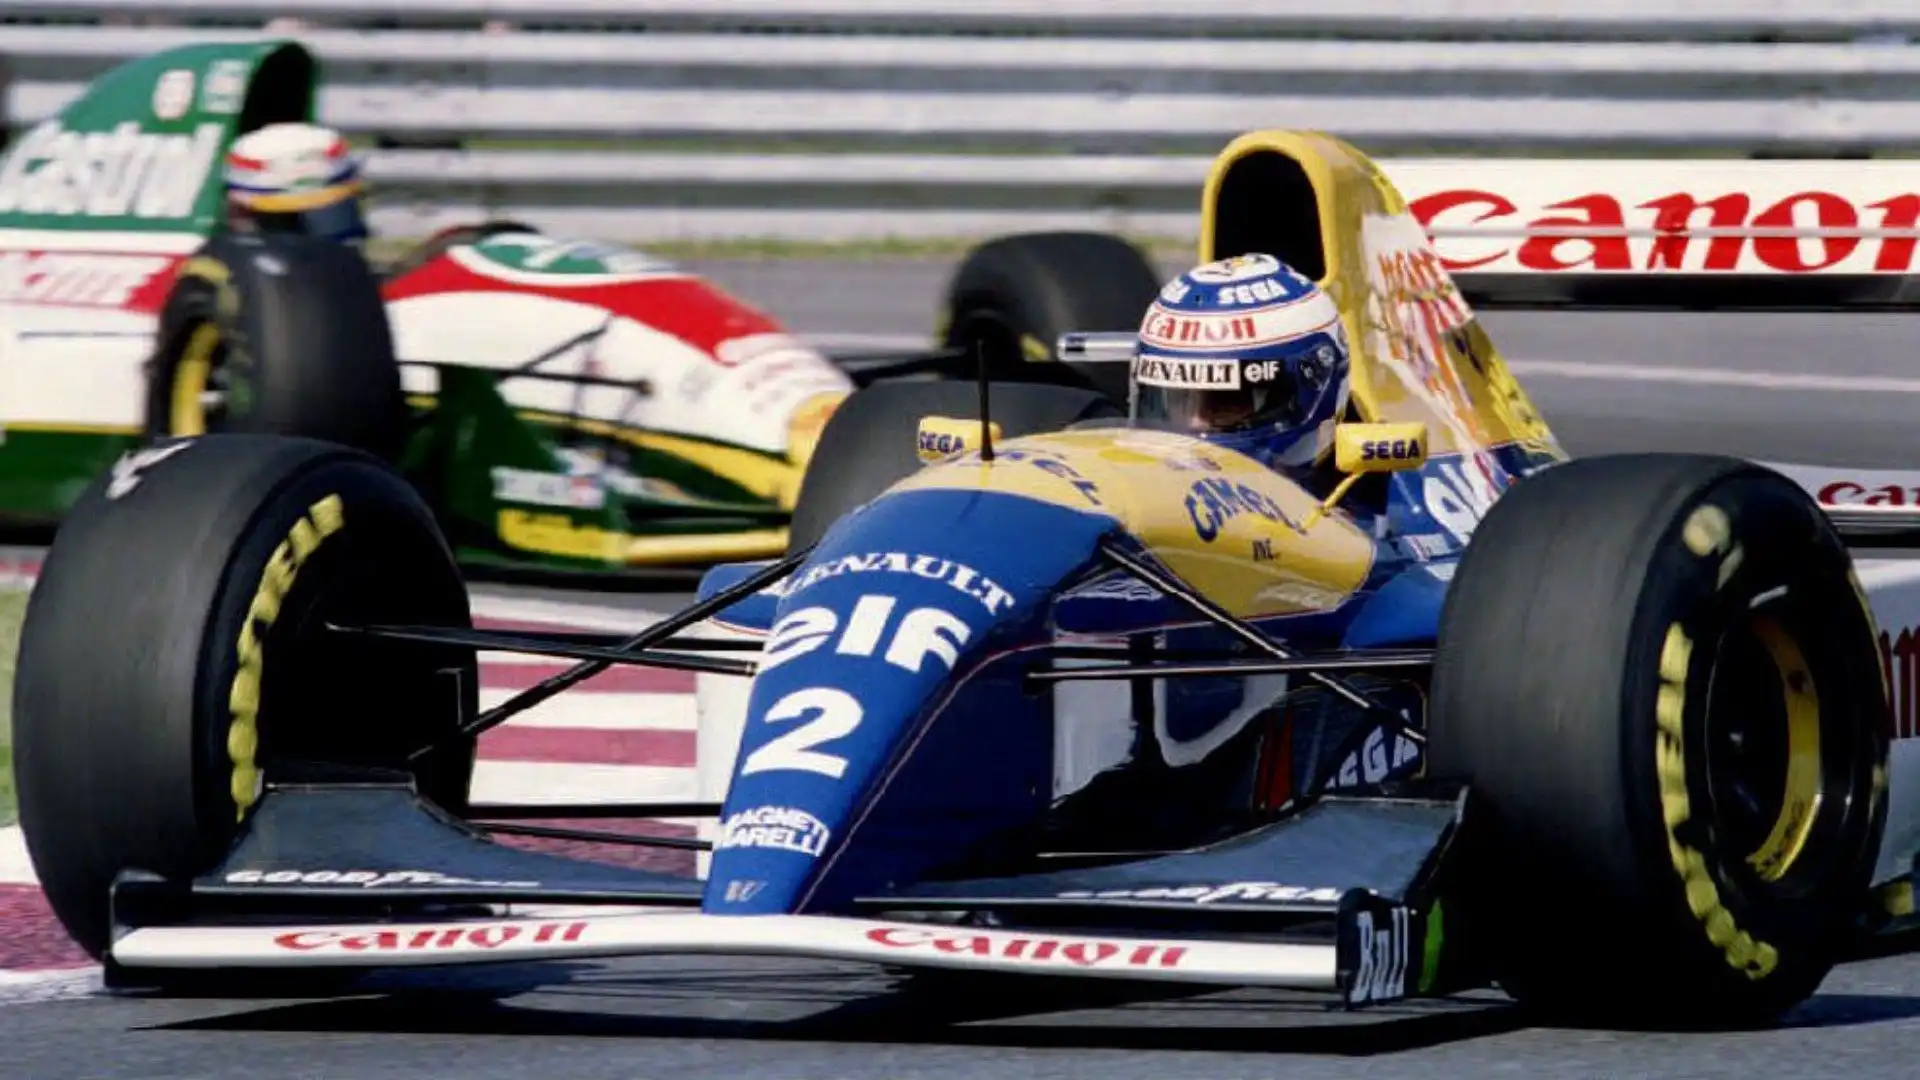 4- Alain Prost 41